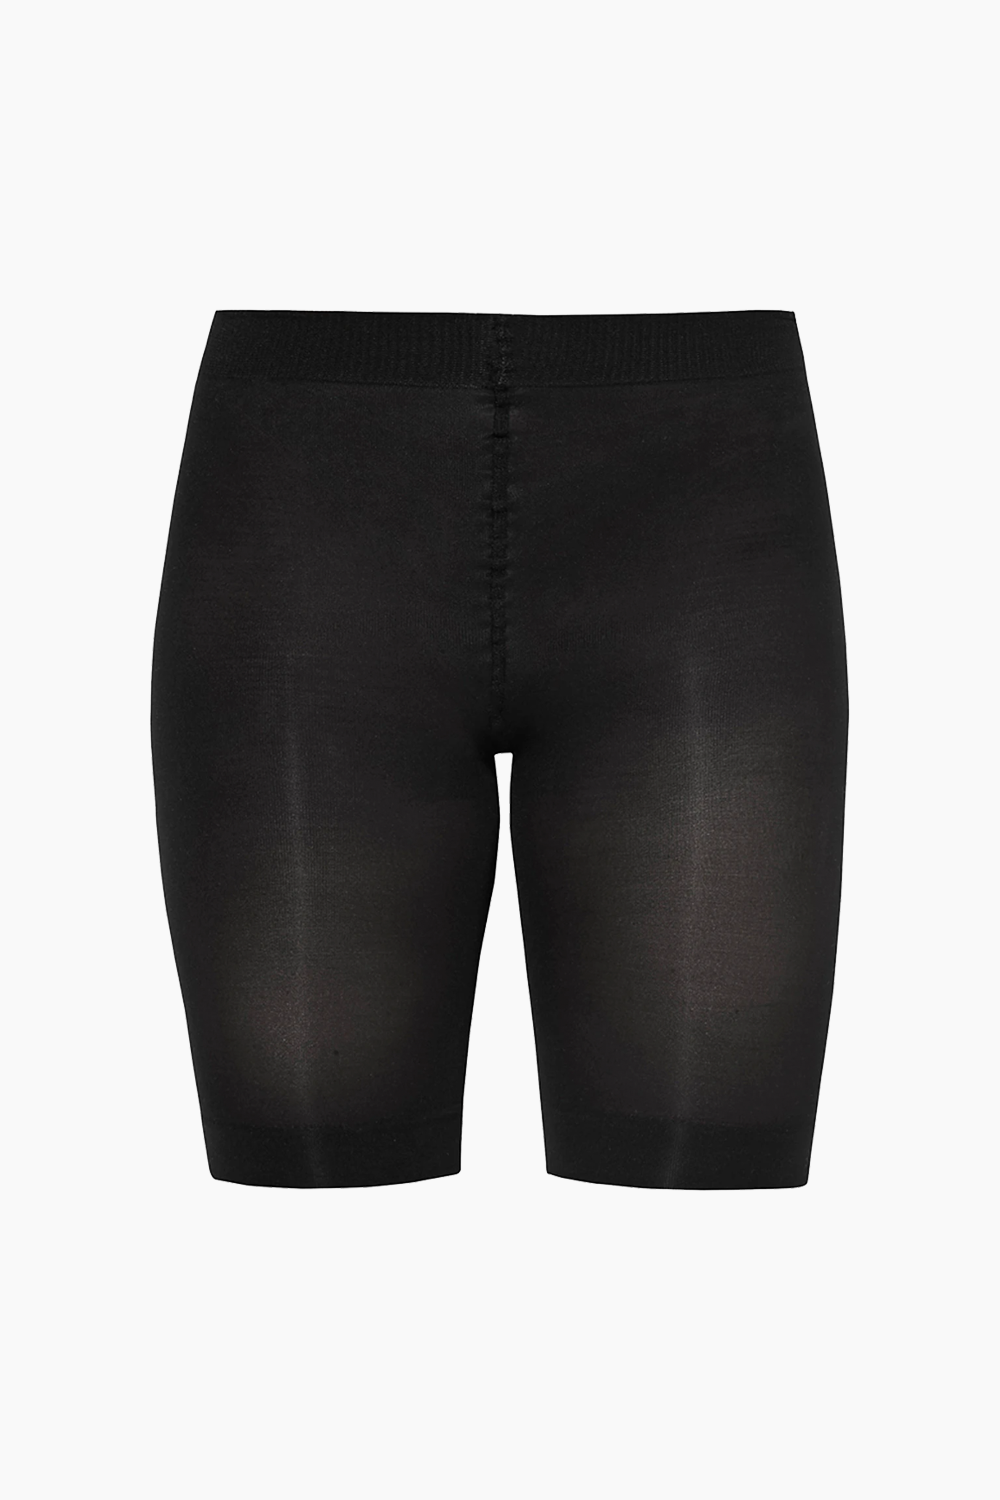 Microfiber Shorts - Black - Sneaky Fox - Sort One Size